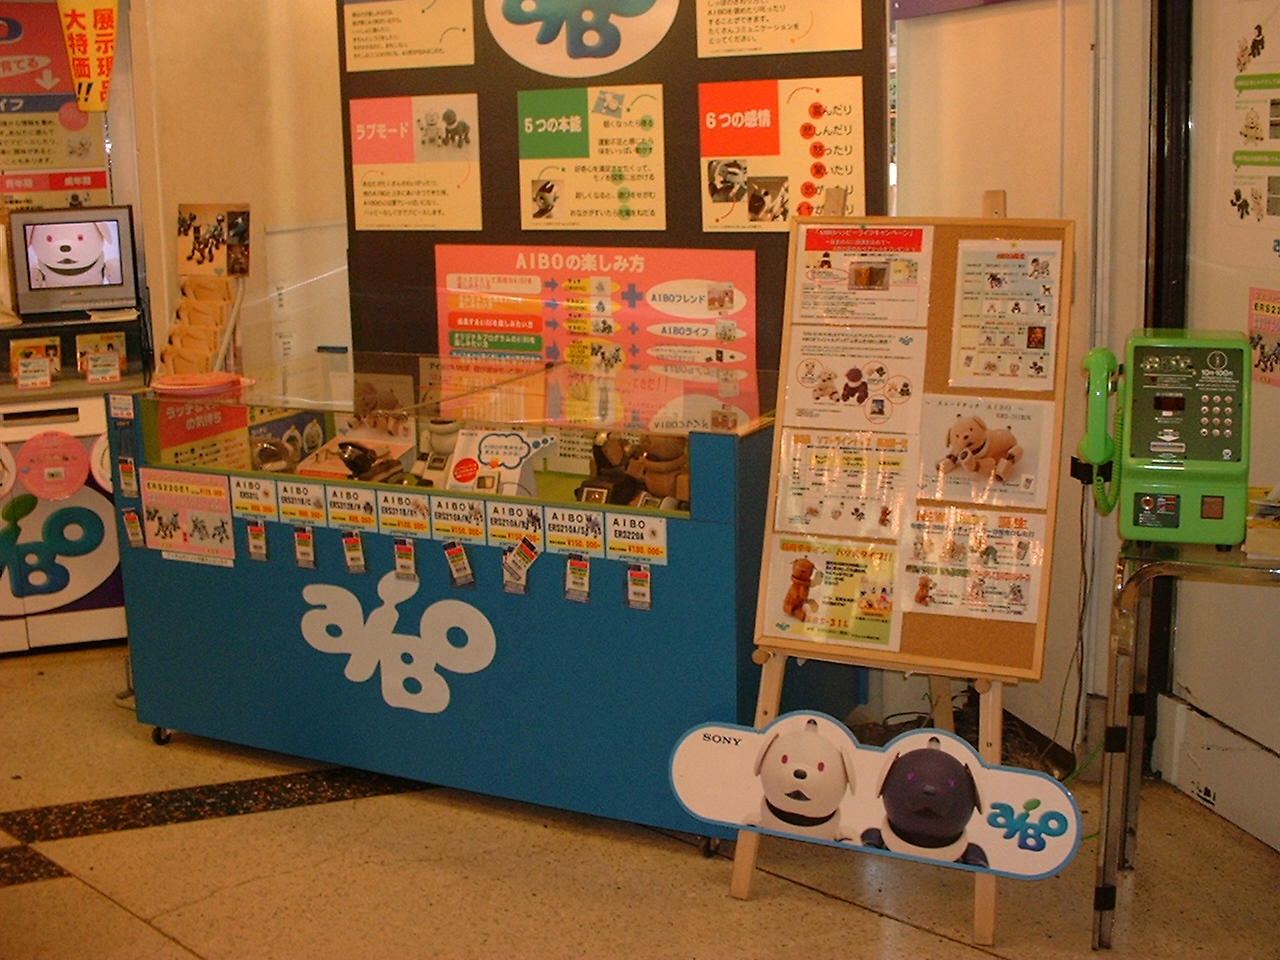 a store display of various robot dog models